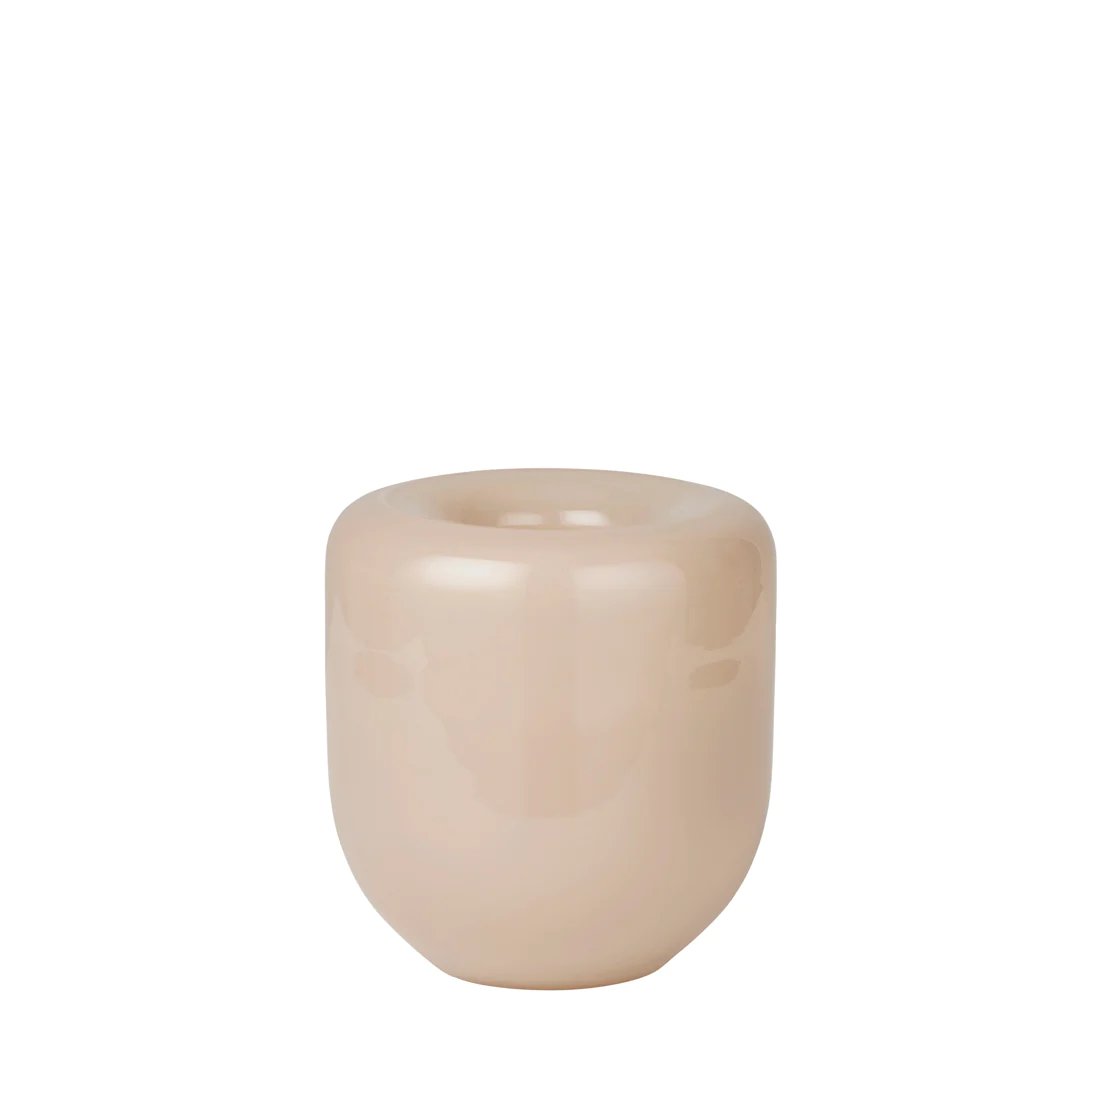 Kristina Dam Studio Opal vase S 16 cm Beige